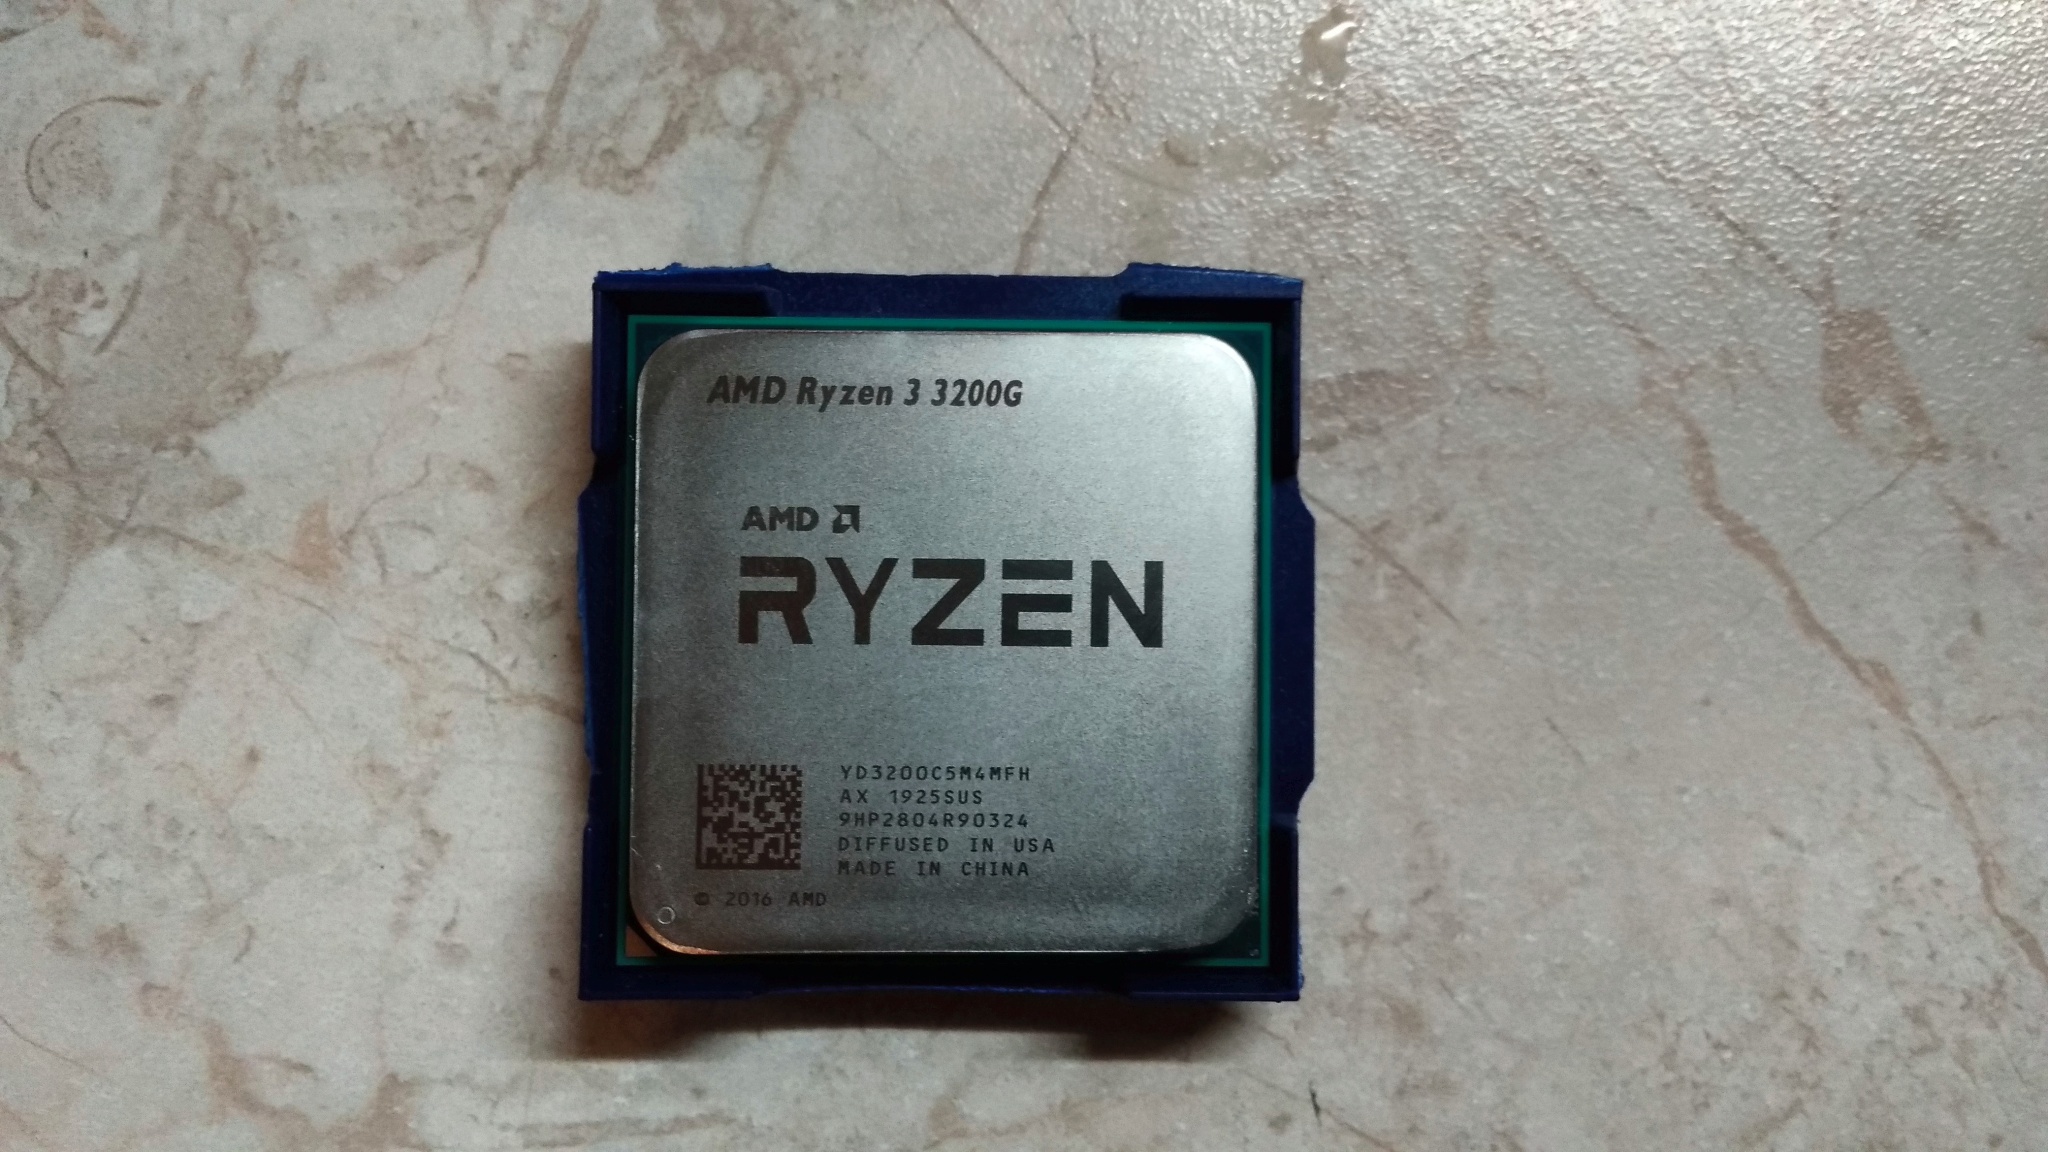 3 pro 3200g. AMD Ryzen 3 3200g. AMD Ryzen 3 Pro 3200g. AMD Ryzen 3 3200g Box. Процессор AMD yd320bc5m4mfh.